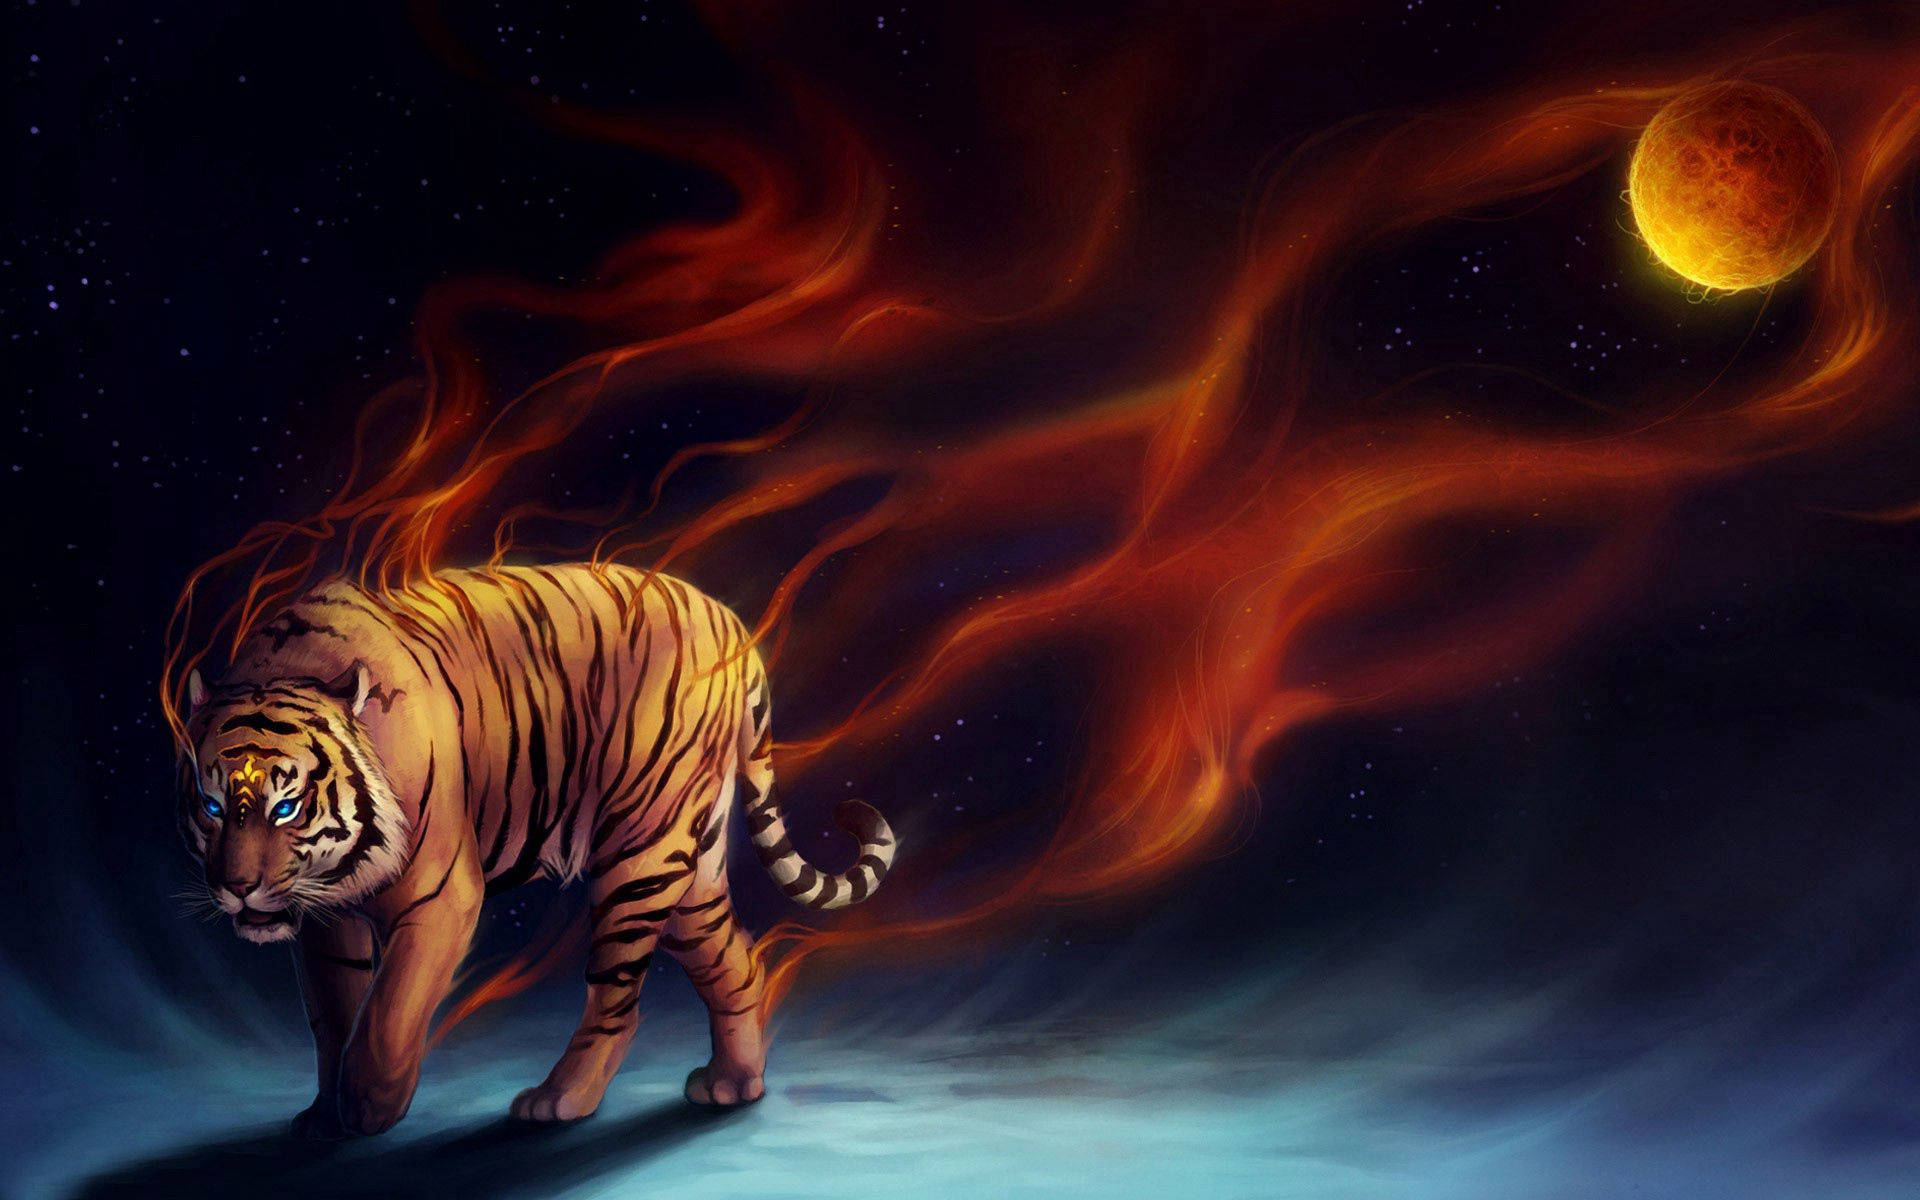 Blazing Tiger And Moon Digital Art Background